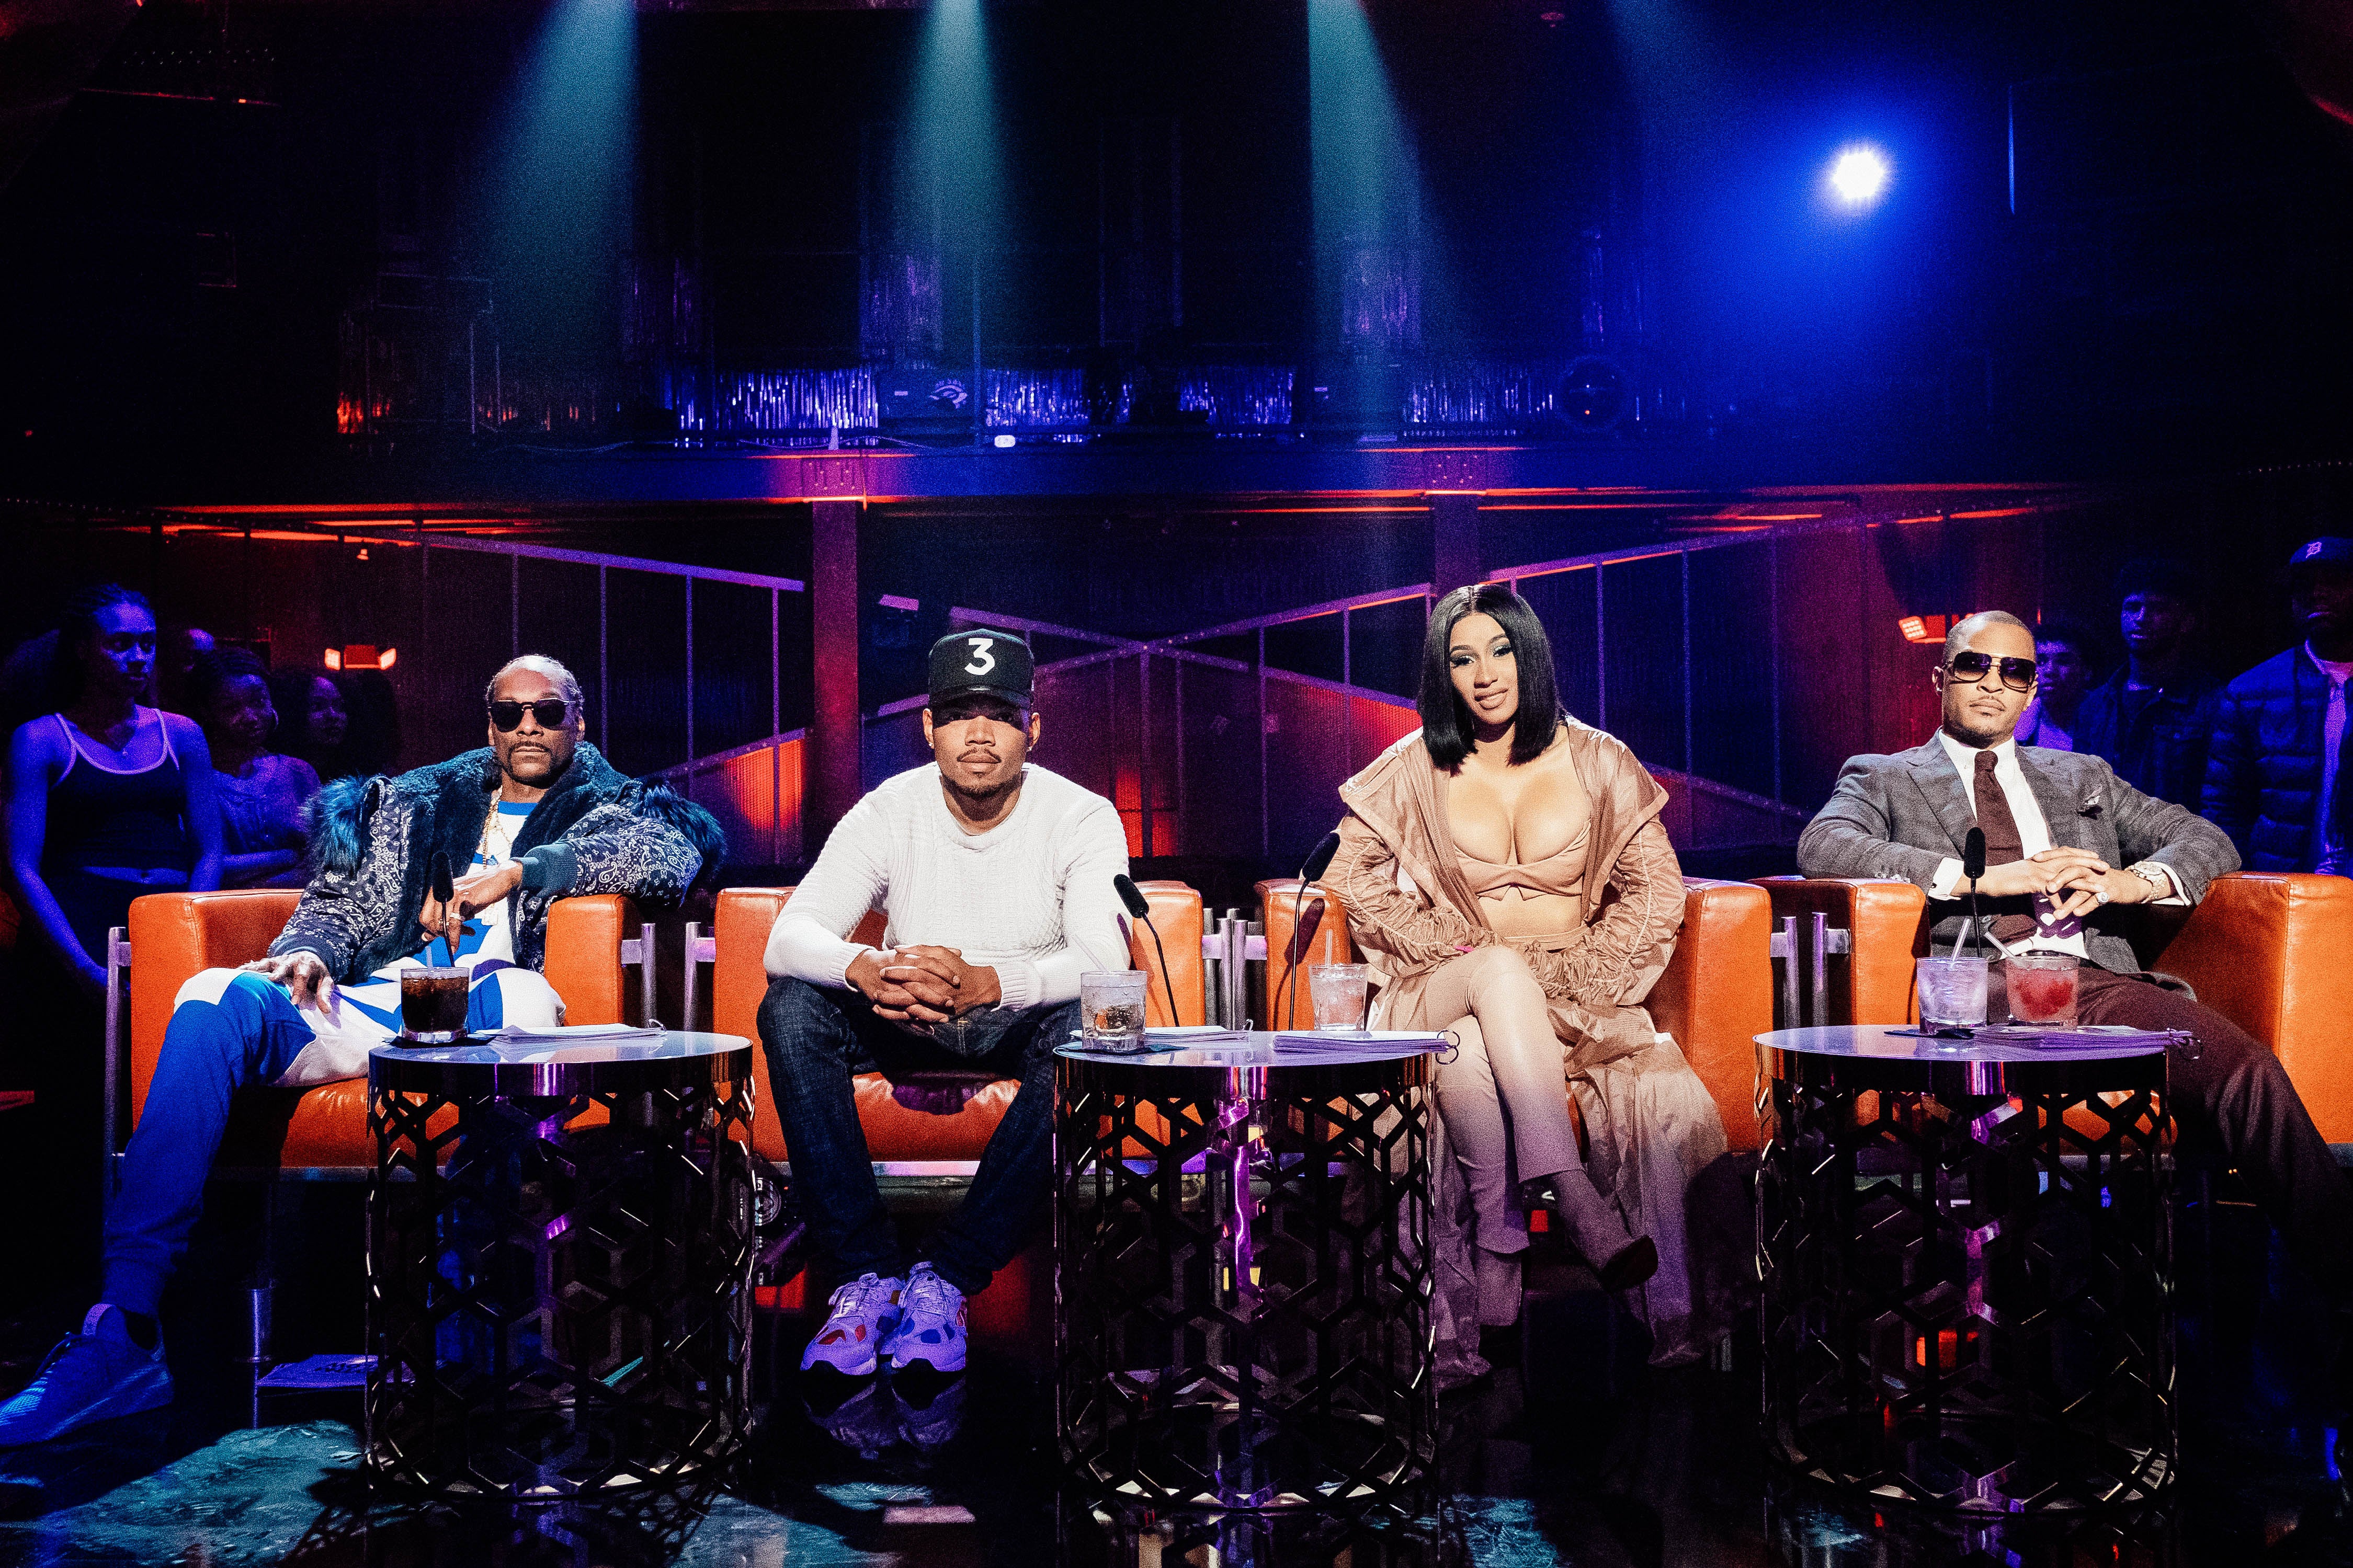 Rhythm + Flow judges Snoop Dogg, Chance the Rapper, Cardi B, and T.I.